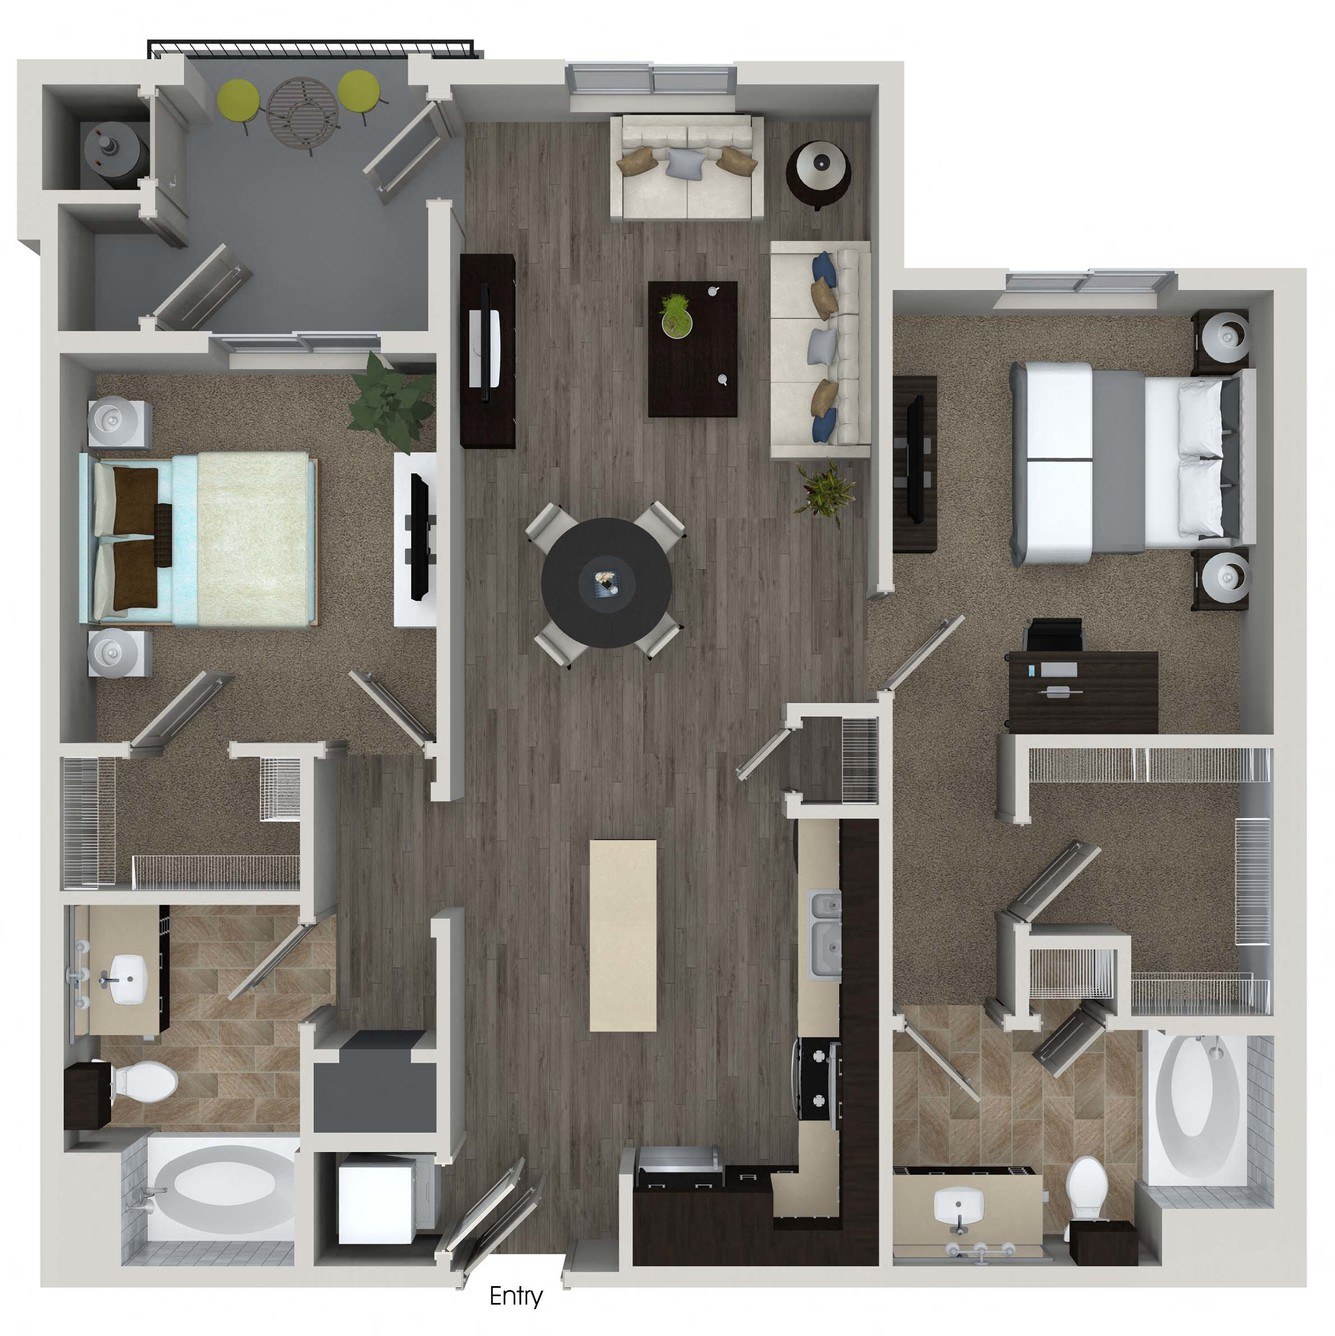 B3a Floorplan Image